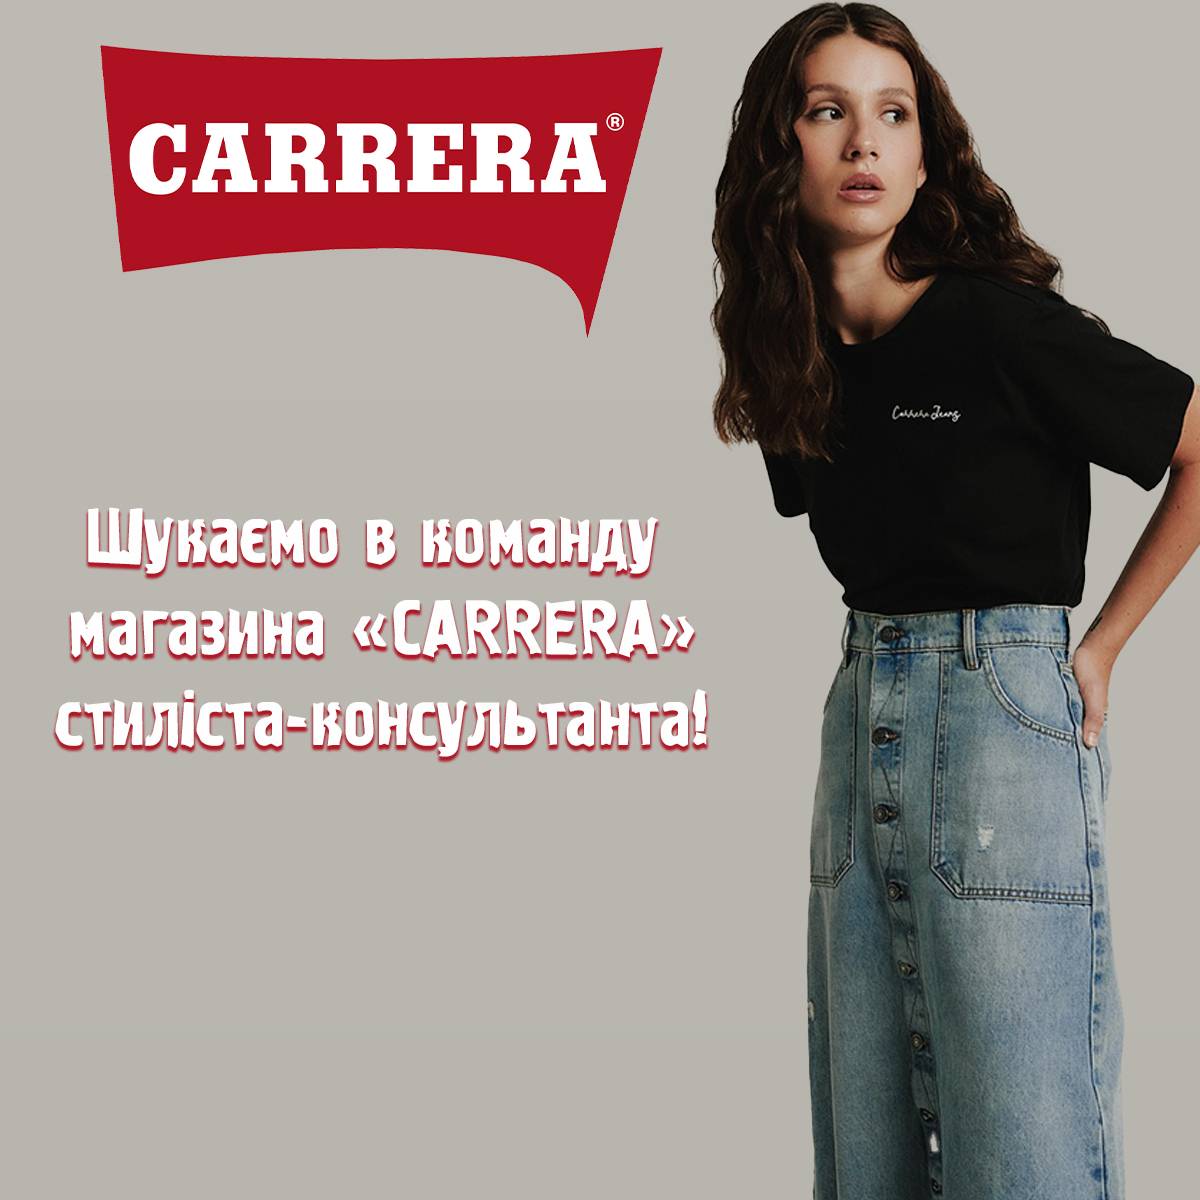 Vacancy in the Carerra store